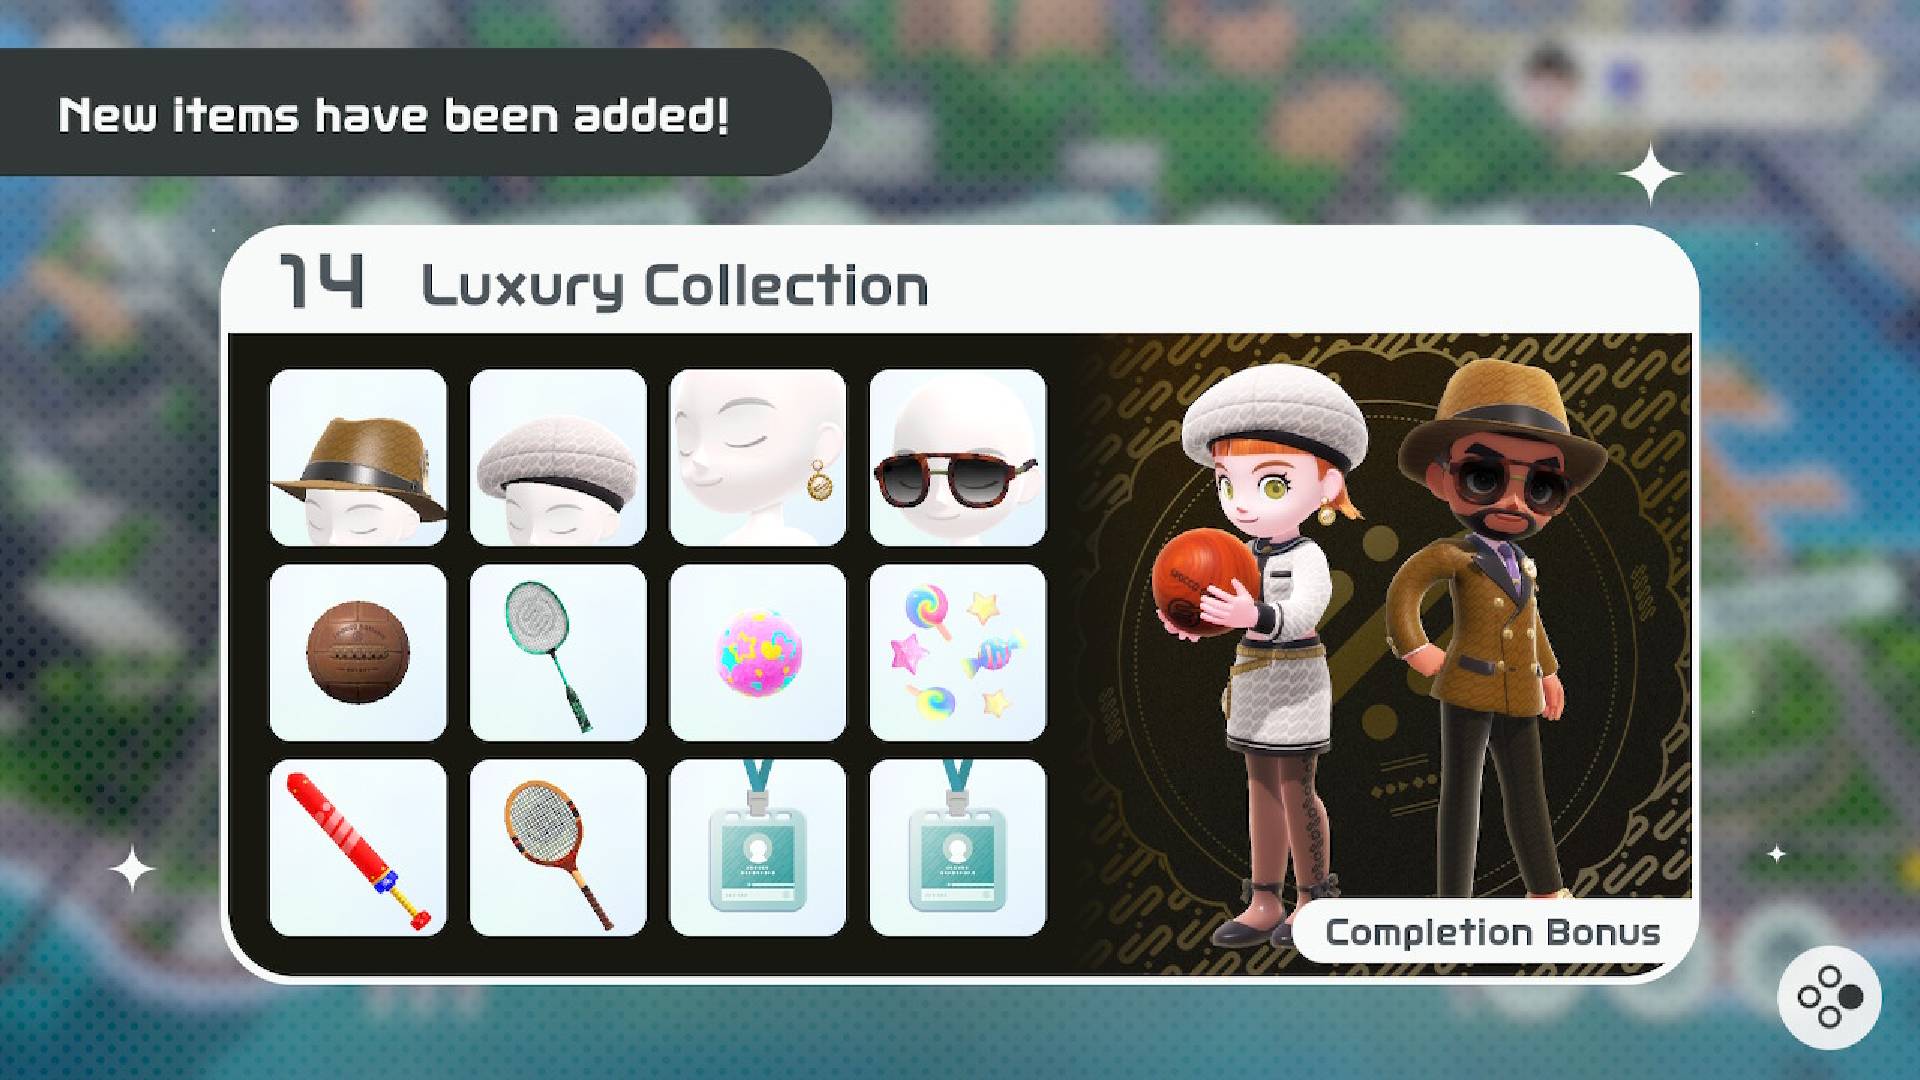 Nintendo switch sports cosmetics: A menu shows a variety of clothes for a nintendo Switch Sports avatar, themed around luxury